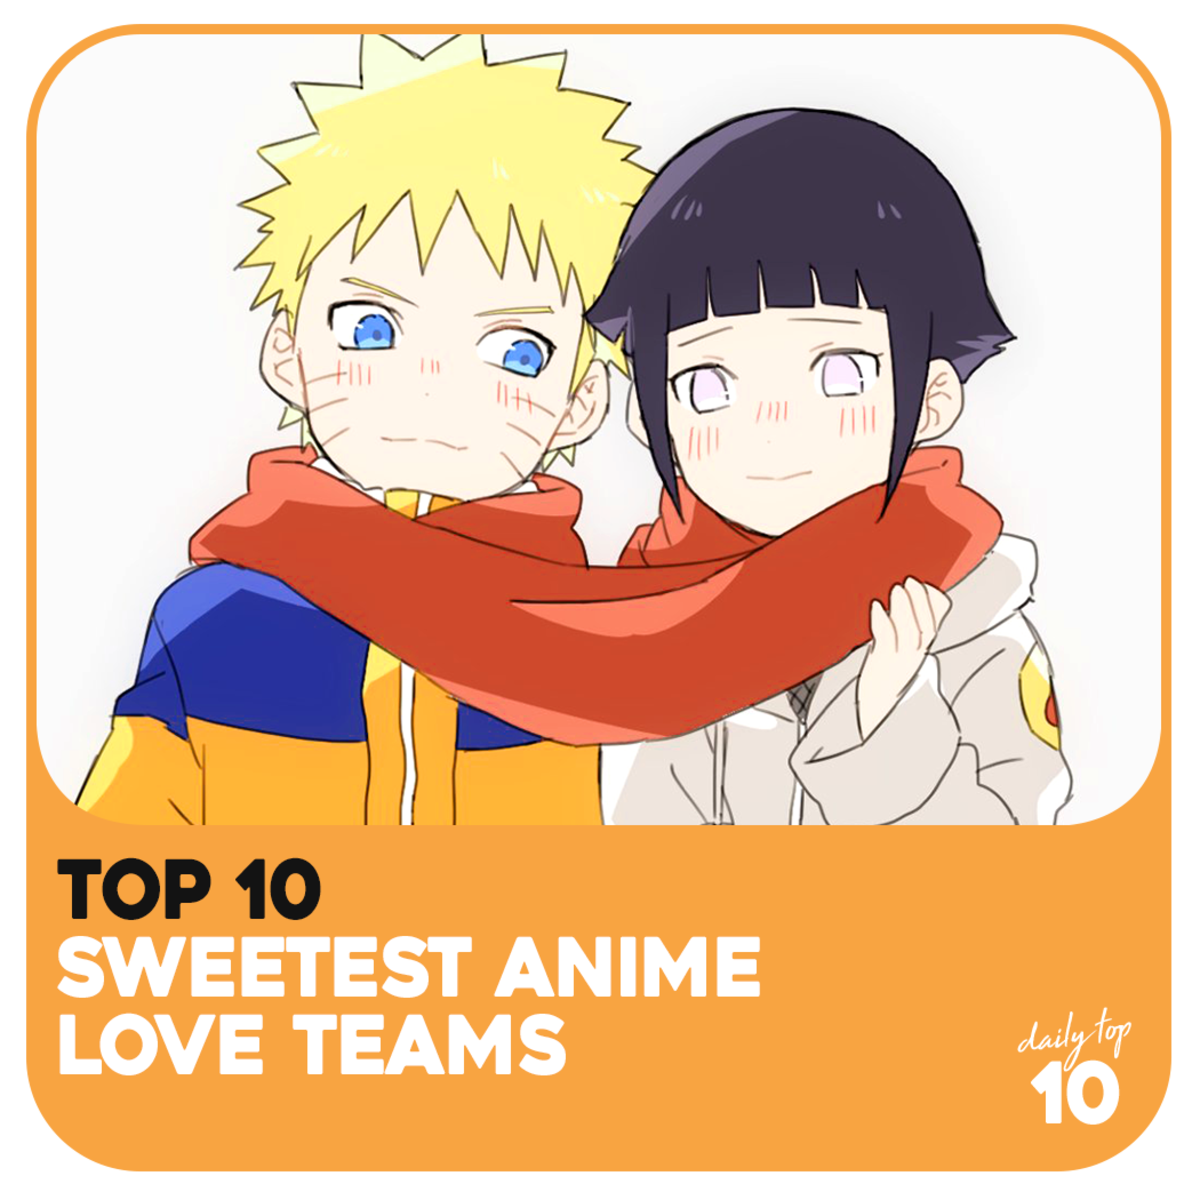 Top 10 Sweetest Anime Love Teams